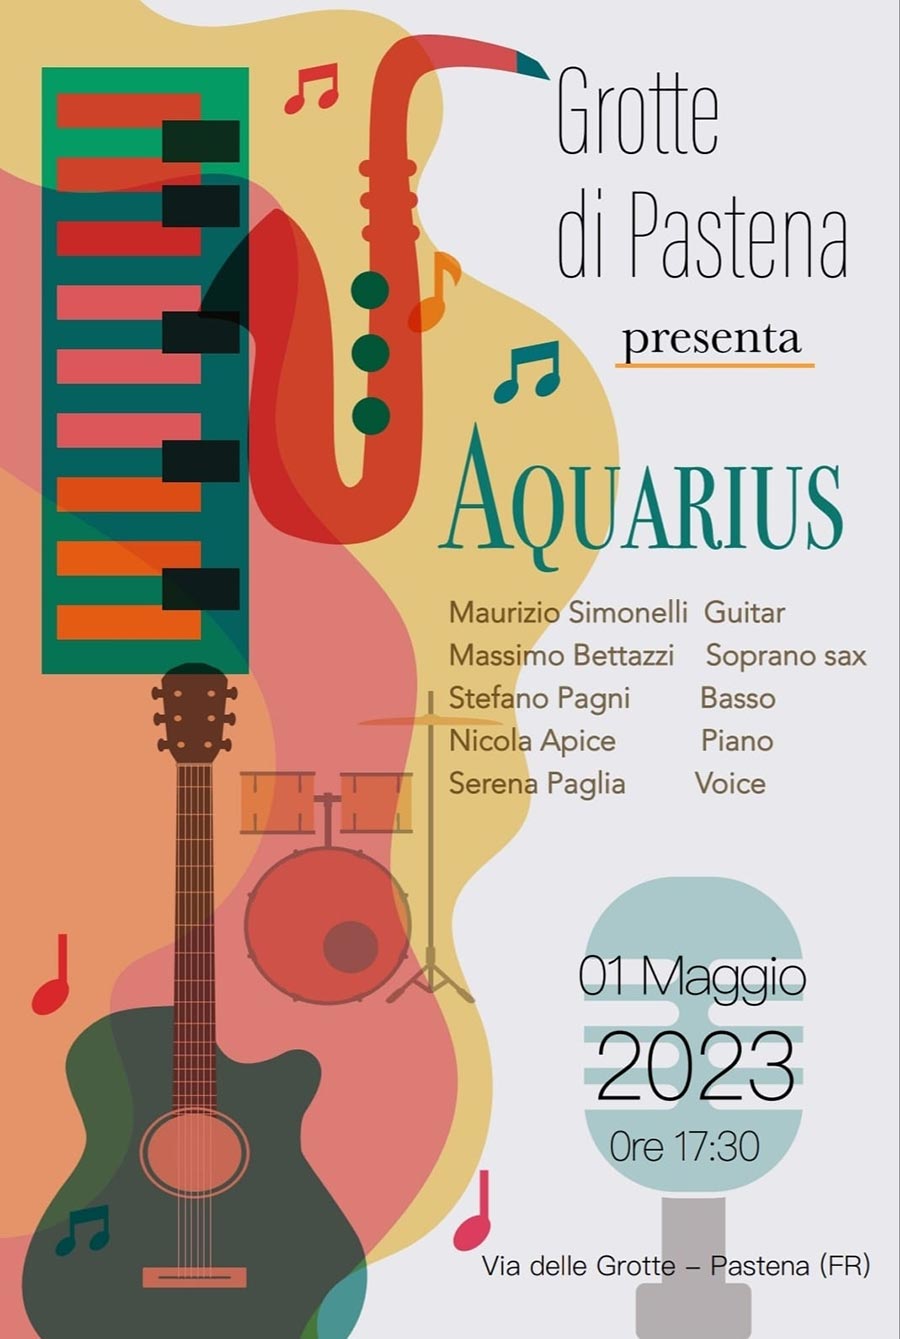 Concerto degli Aquarius